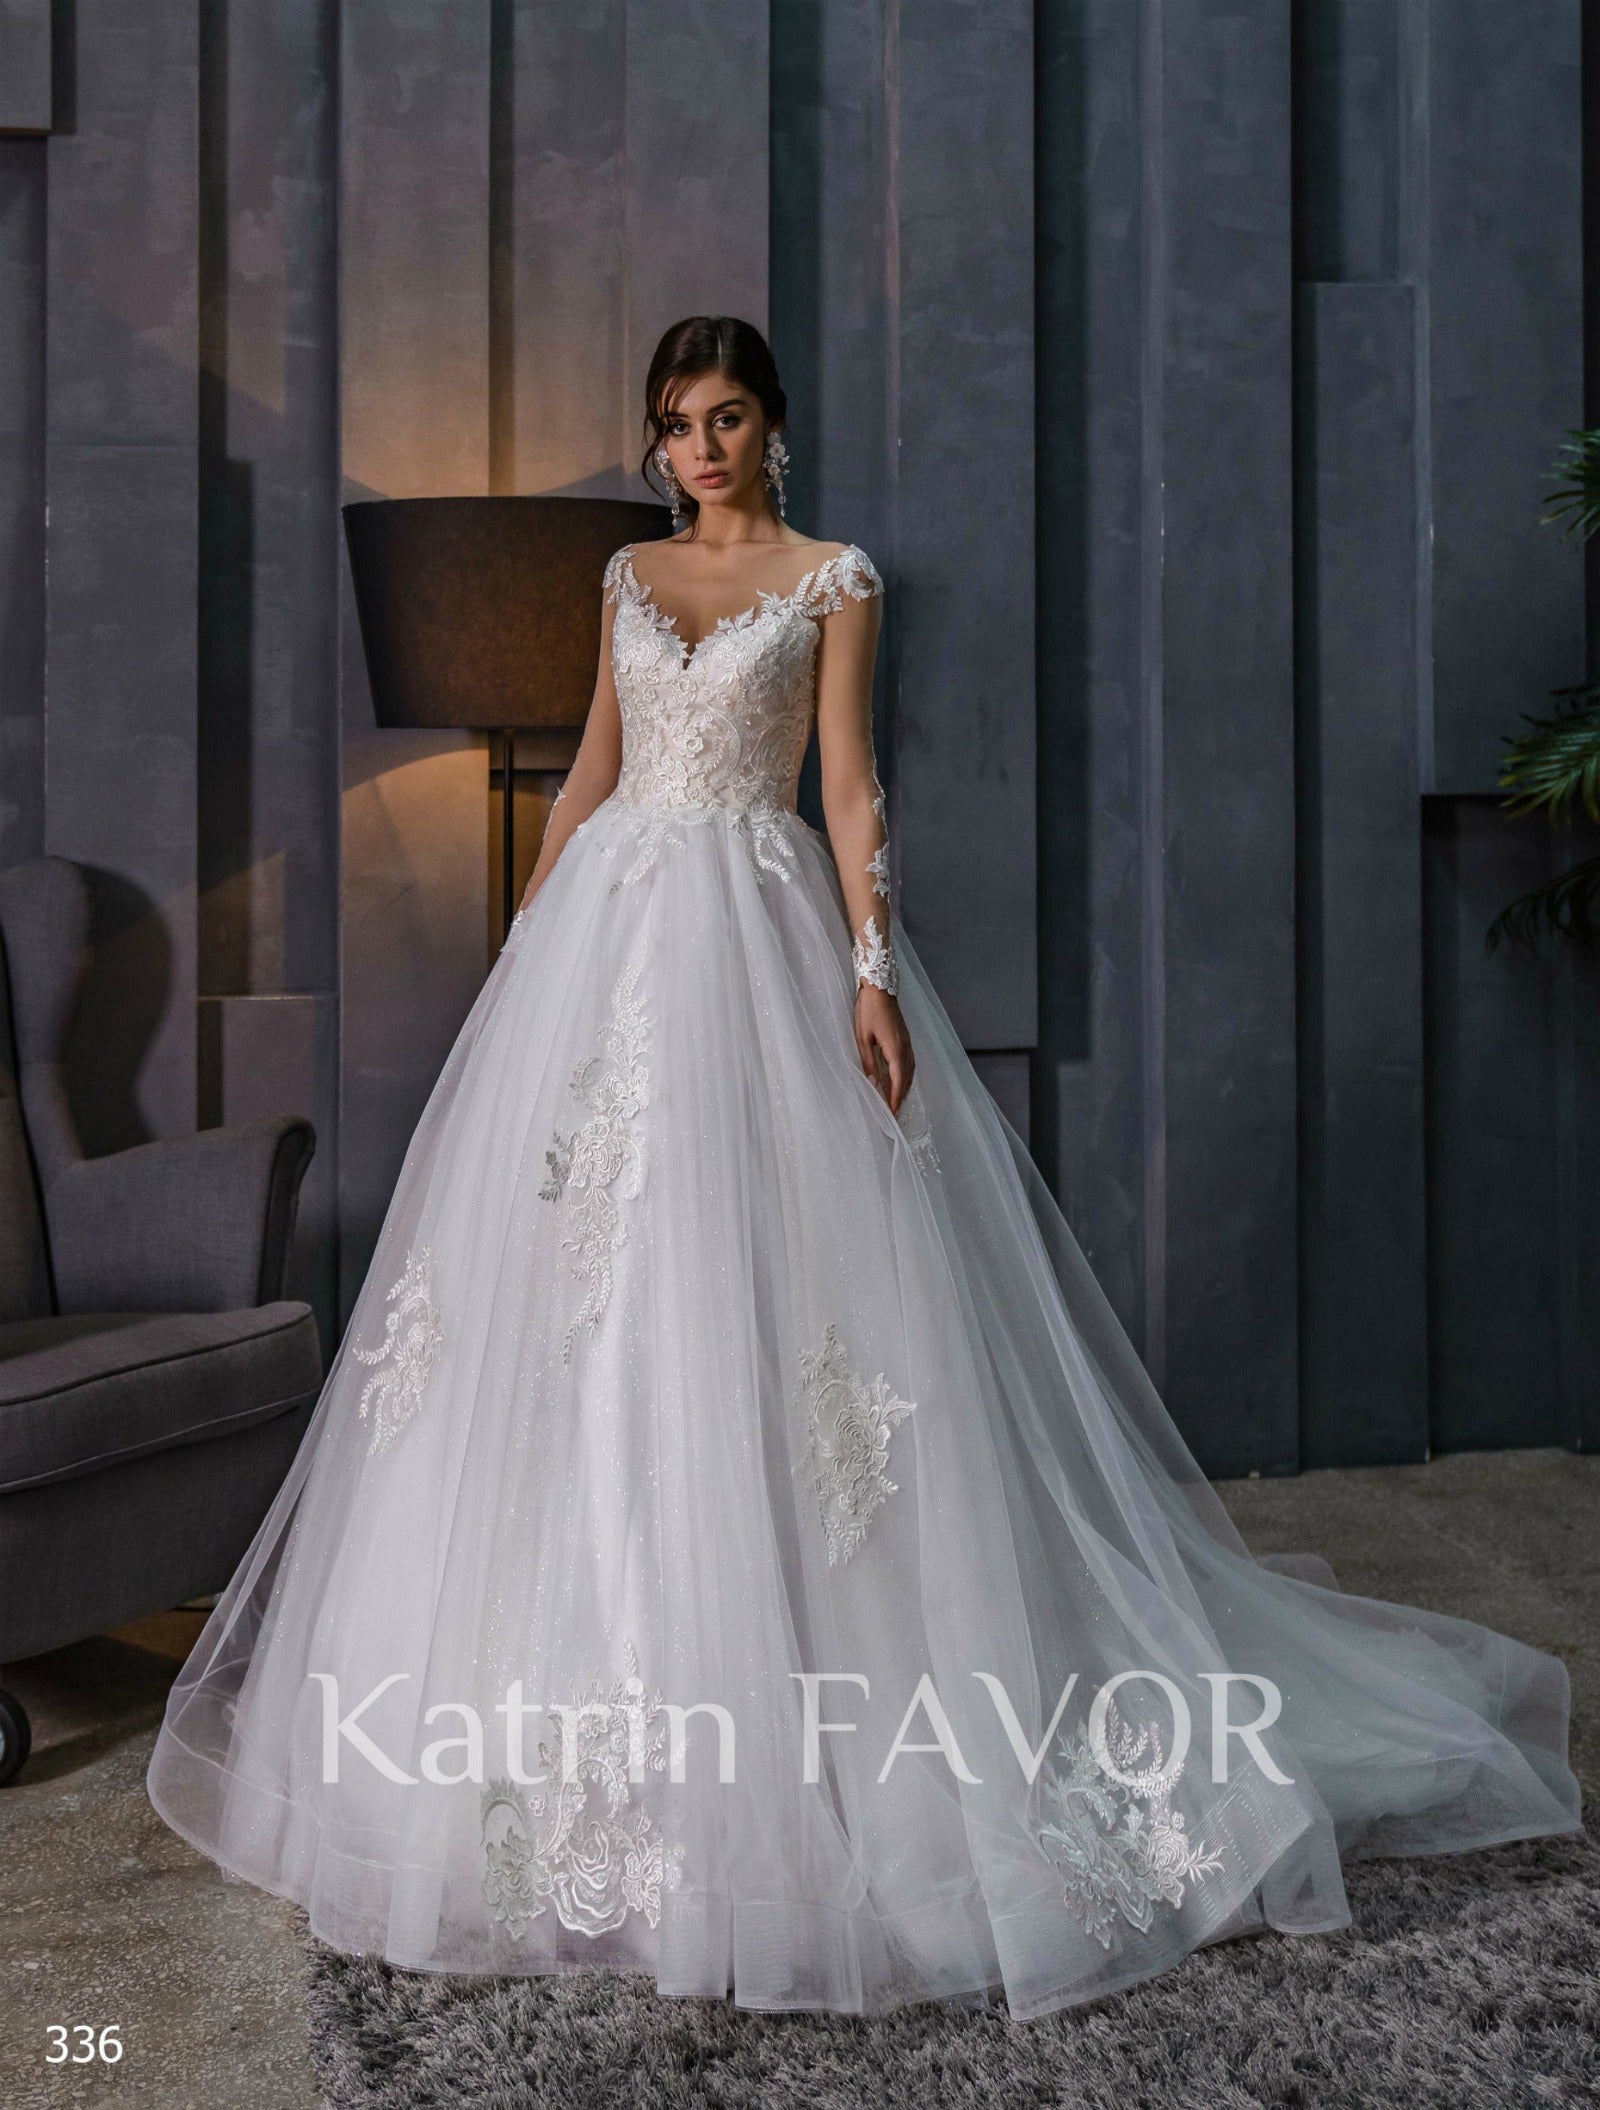 KatrinFAVORboutique-Embroidered long sleeve wedding dress